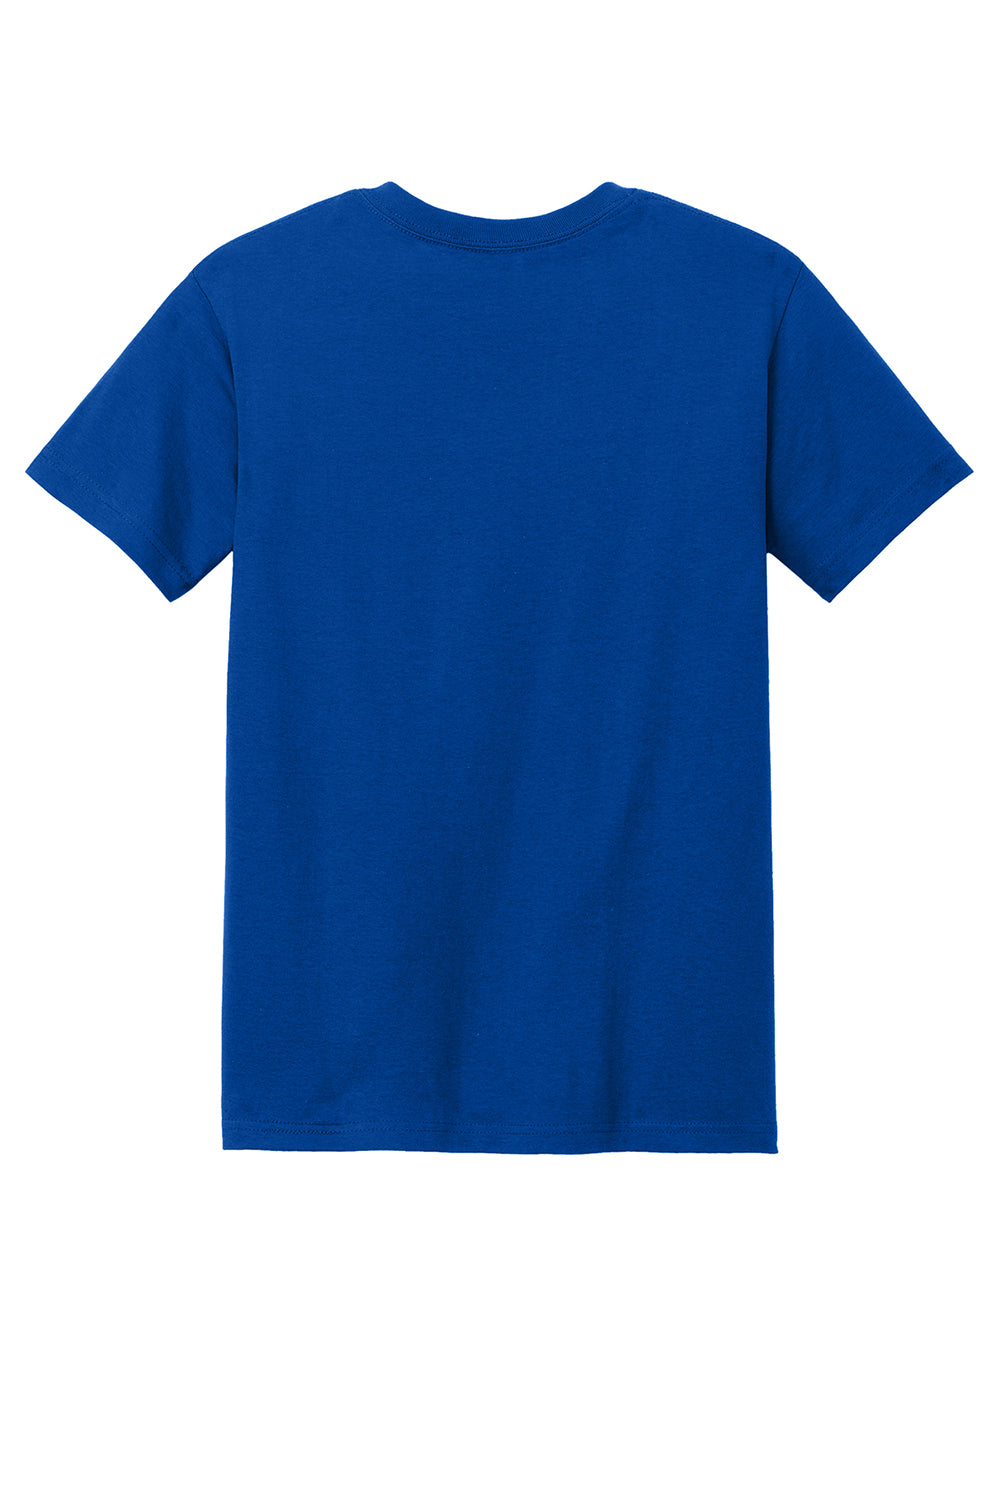 American Apparel 1301/AL1301 Mens Short Sleeve Crewneck T-Shirt Royal Blue Flat Back